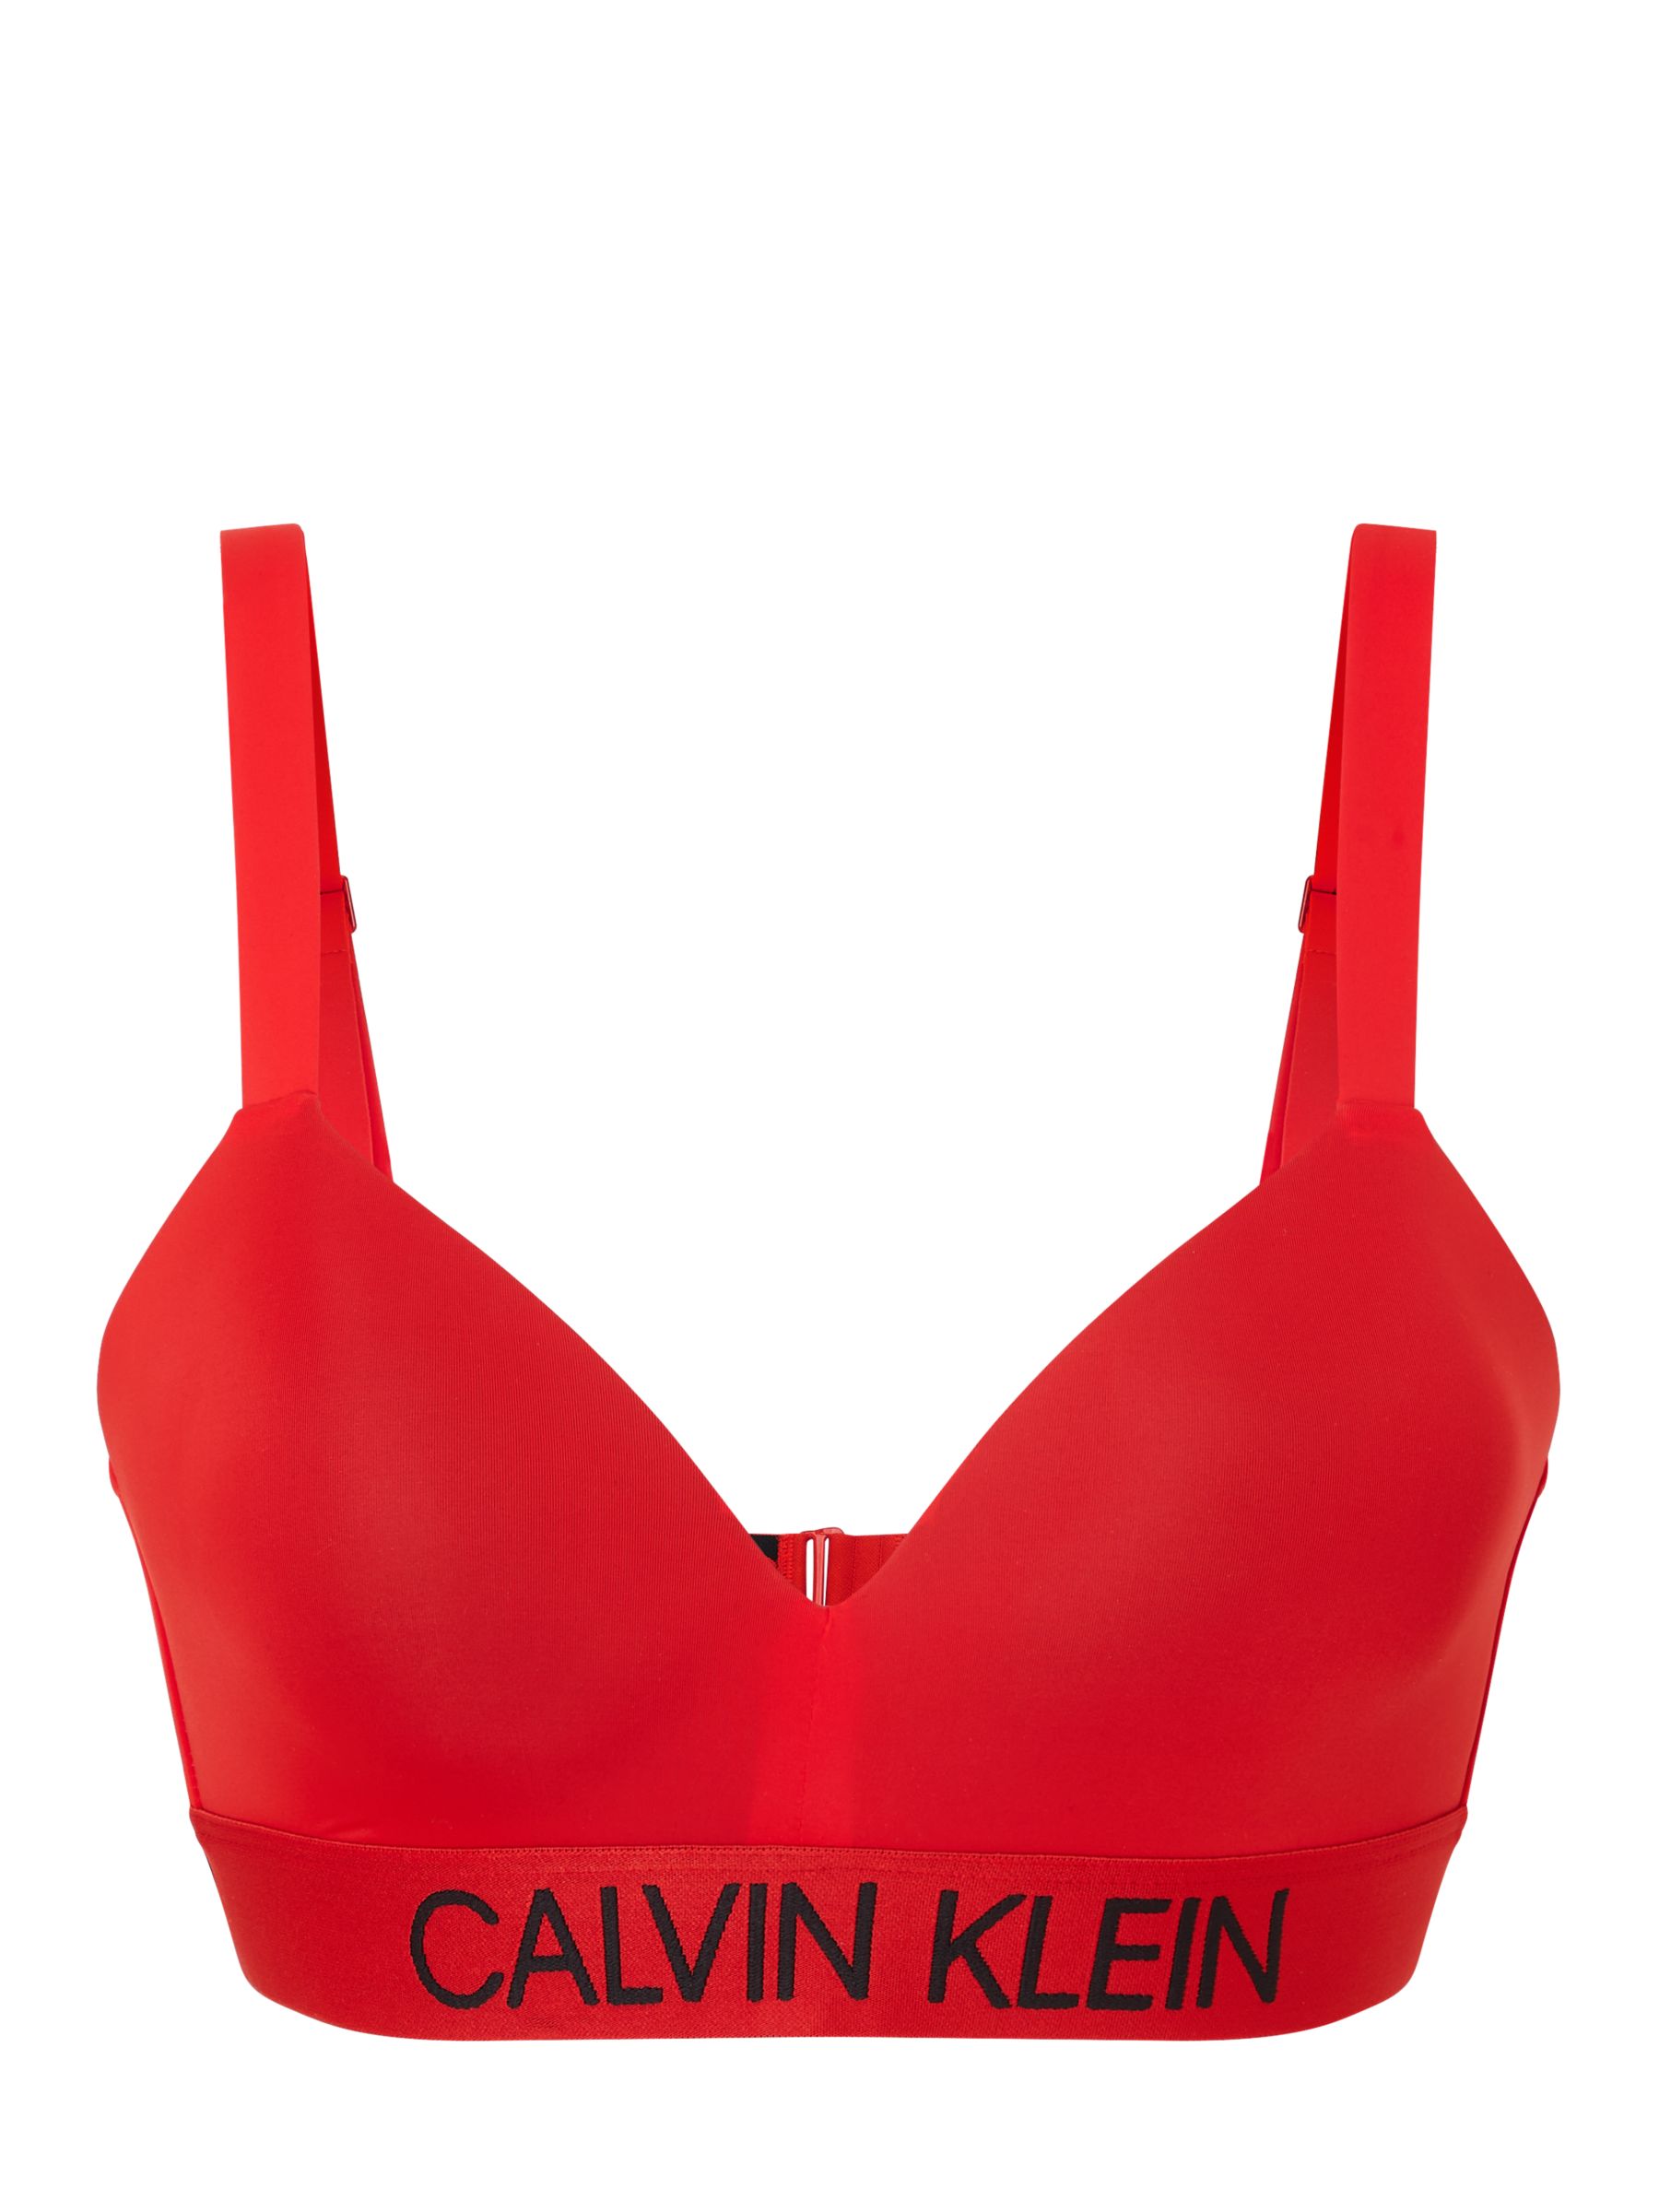 calvin klein red bikini top